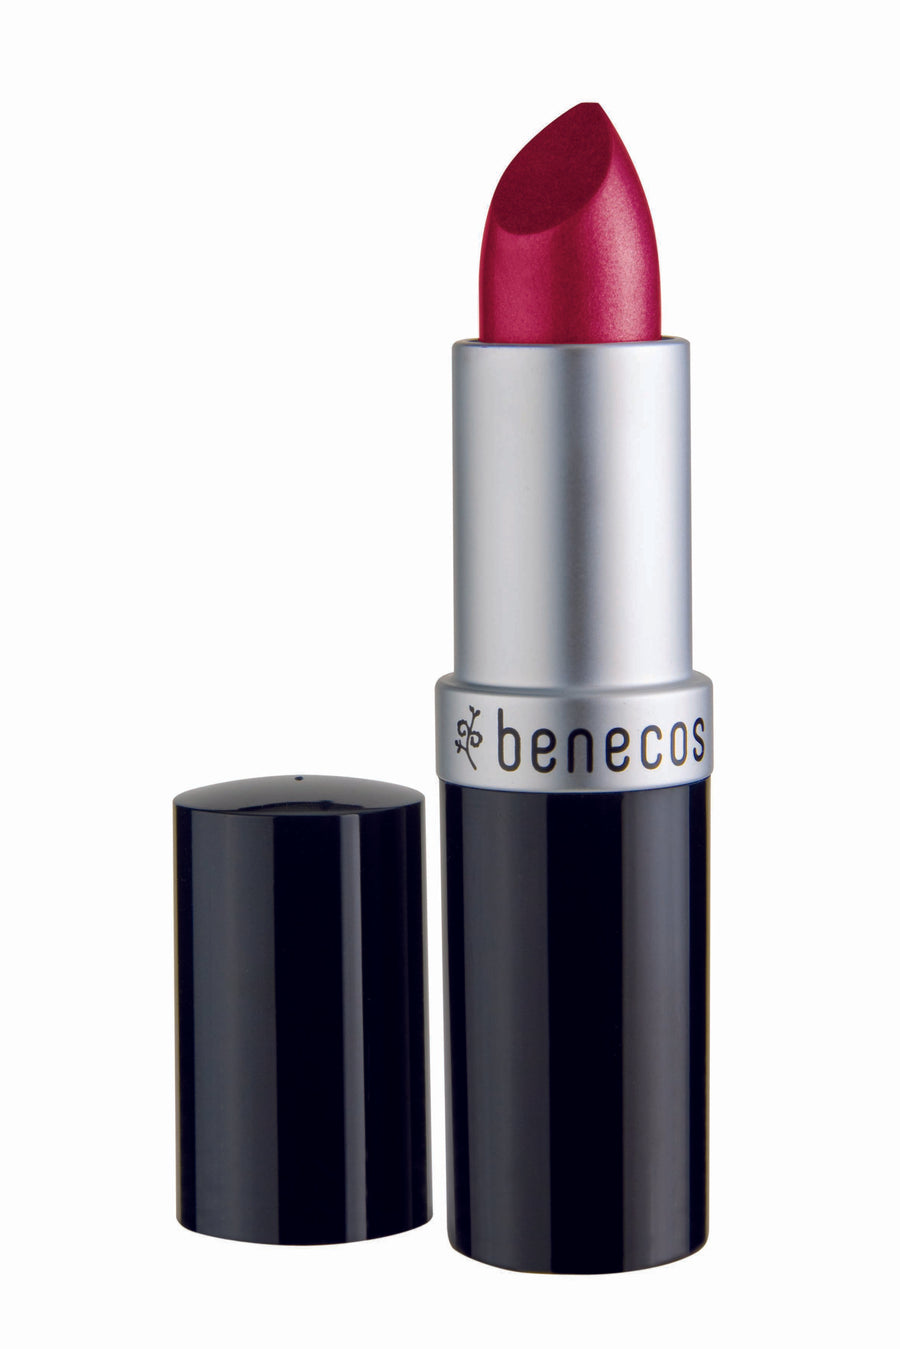 Benecos Natural Lipstick Marry Me 4.5g